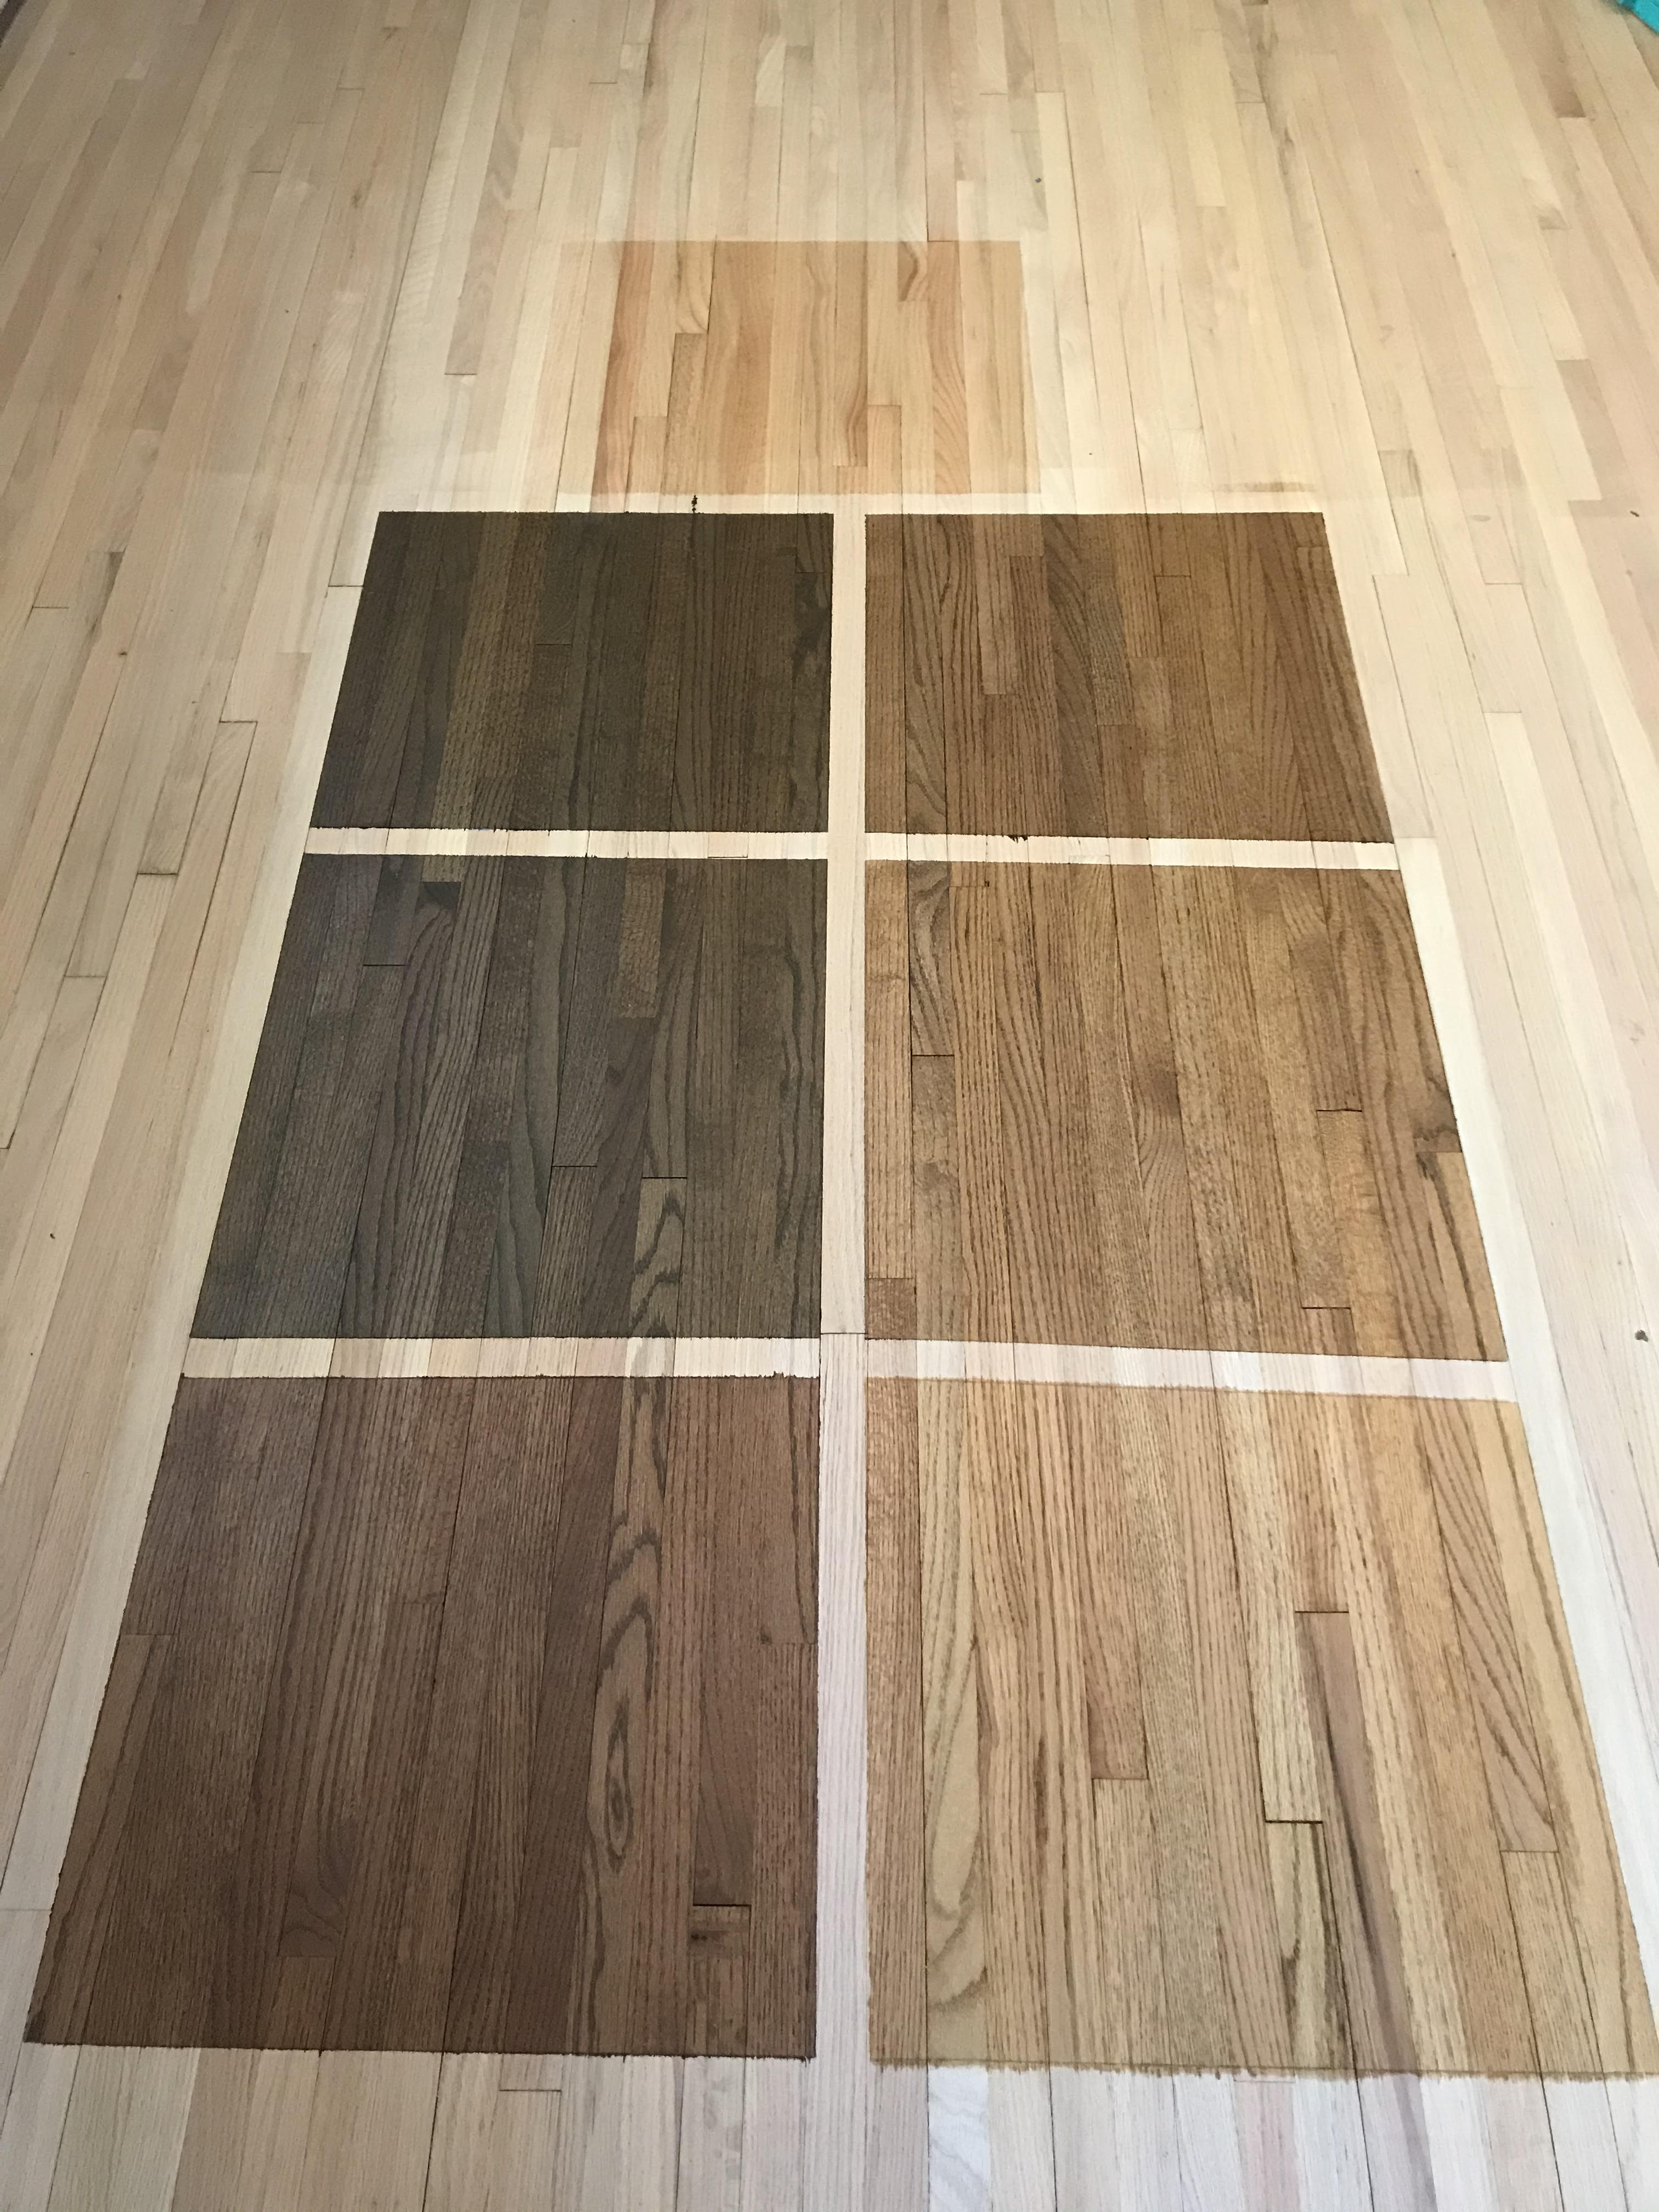 Hardwood Floor Refinishing Ub, How Often Do Hardwood Floors Need To Be Refinished